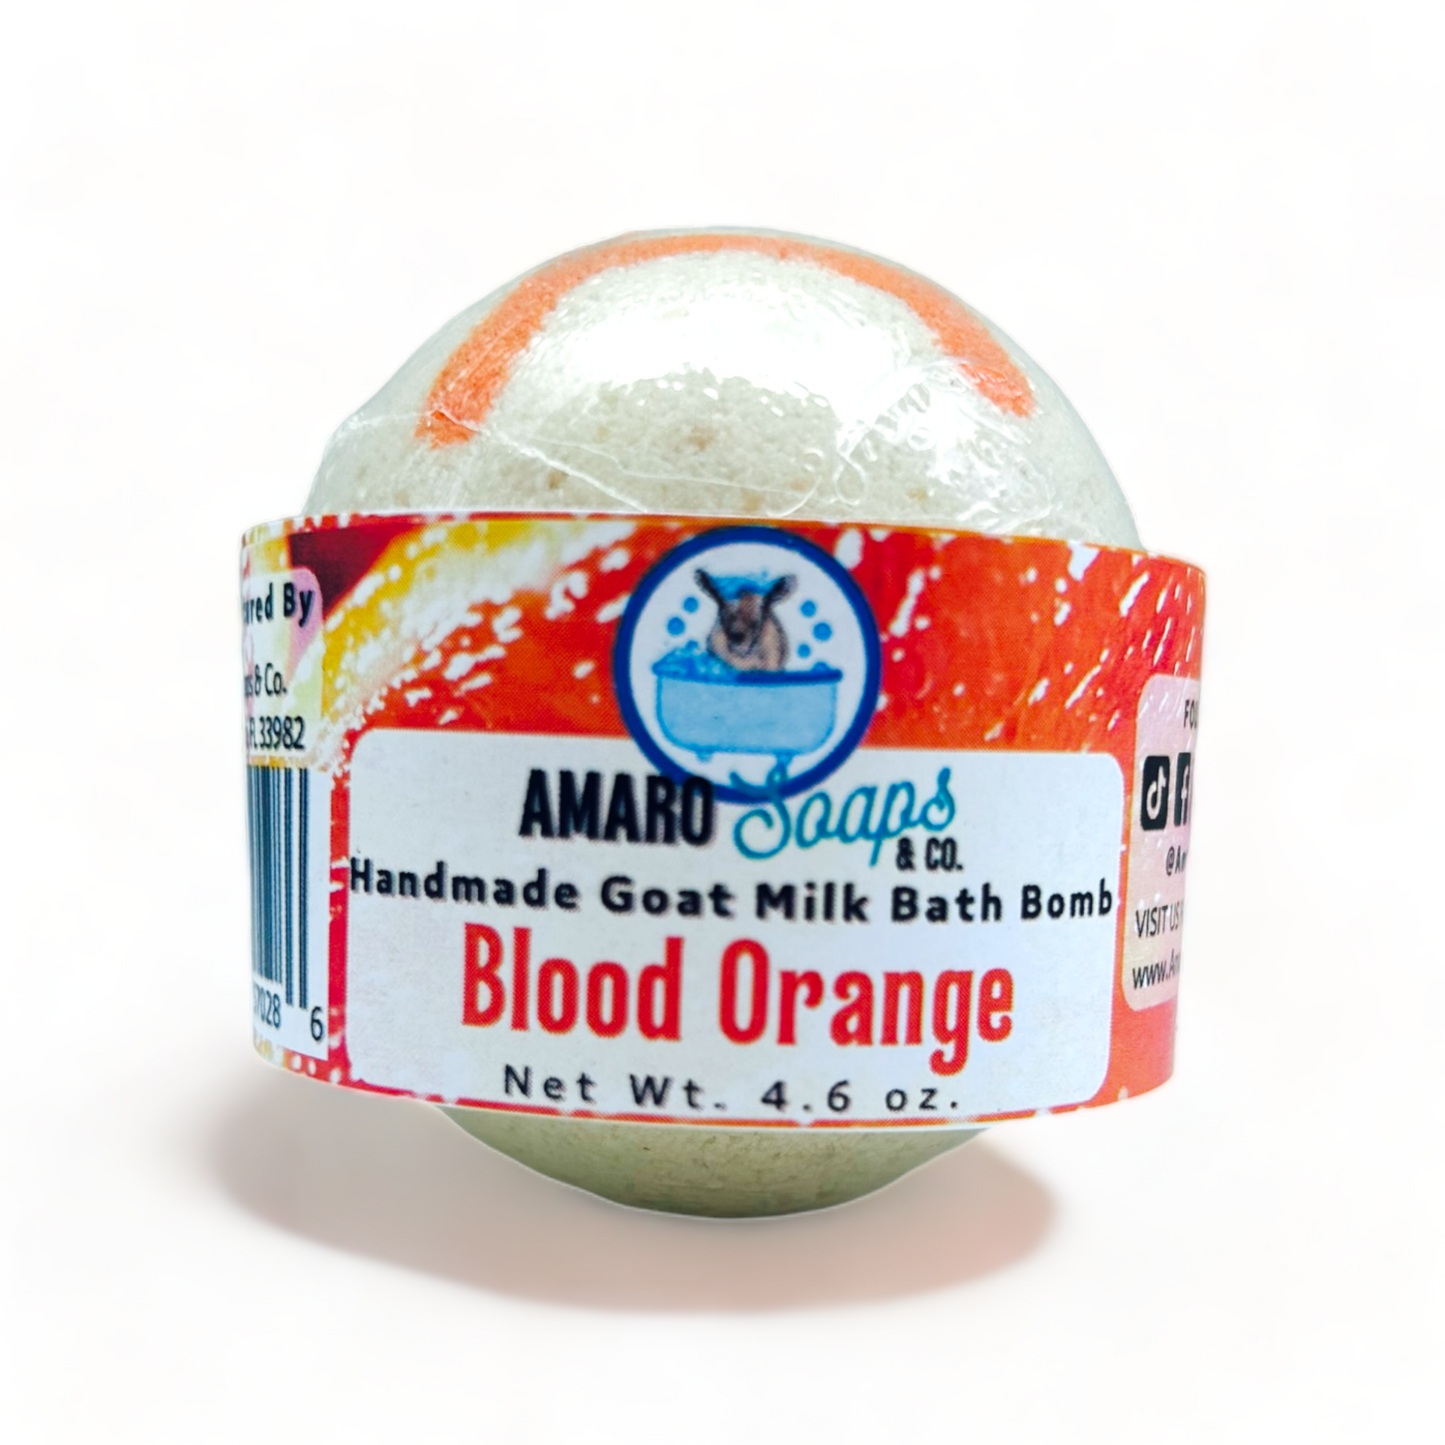 Blood Orange Bath Bomb